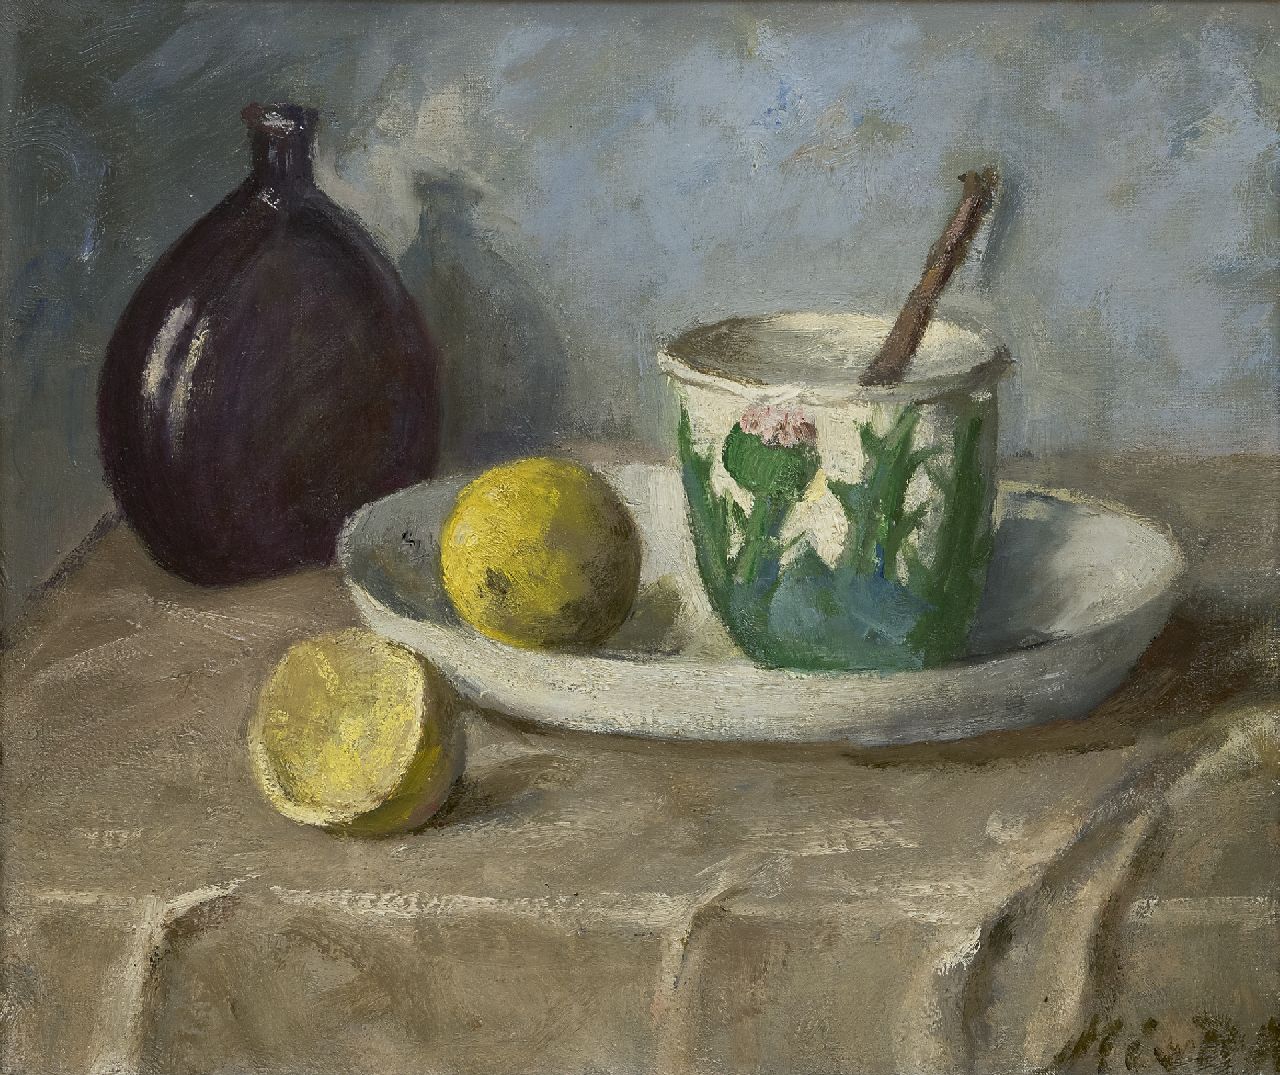 Regteren Altena M.E. van | 'Marie' Engelina van Regteren Altena, A still life with a dish, a cyp and lemons, oil on canvas 34.0 x 40.3 cm, signed l.r.